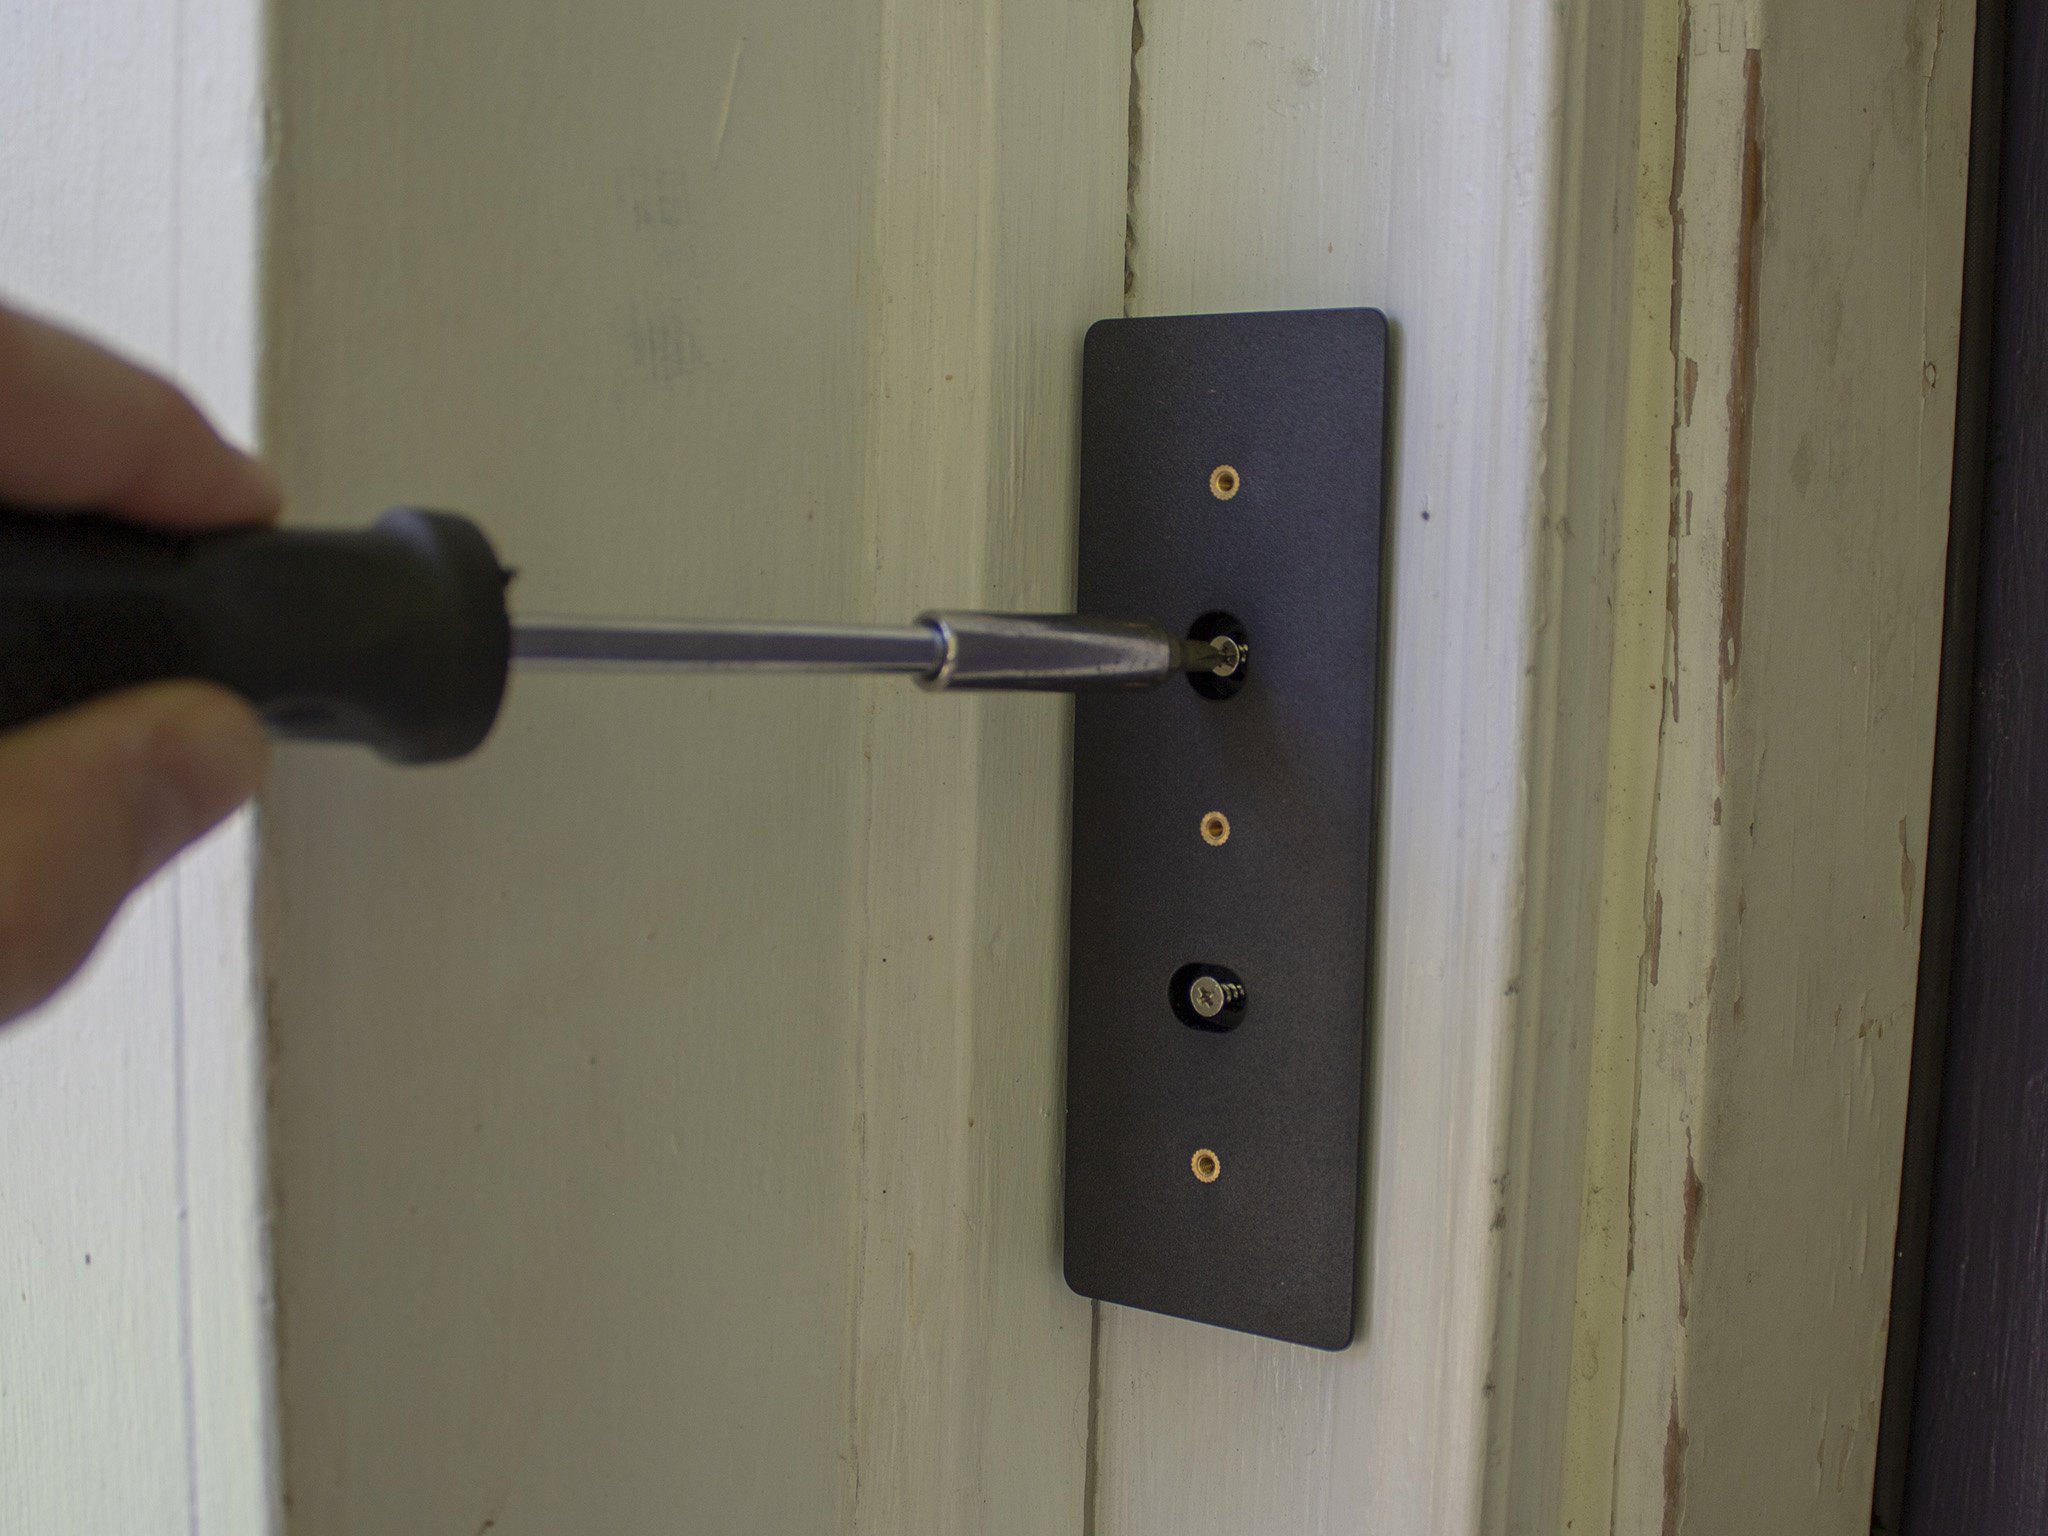 August View Video Doorbell Installation